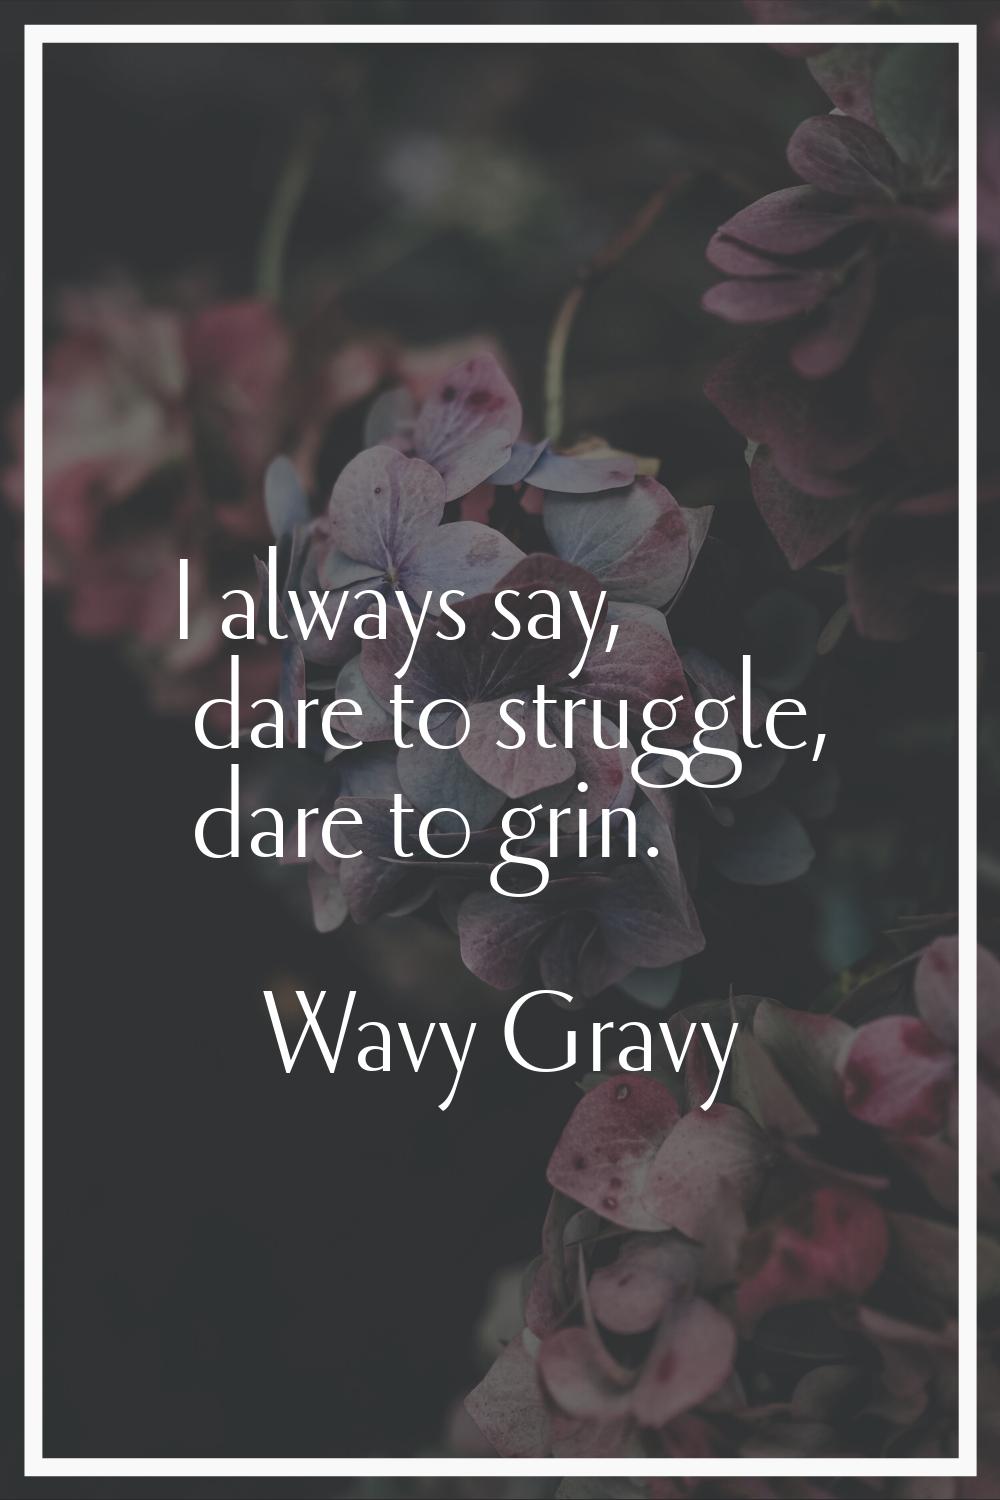 I always say, dare to struggle, dare to grin.